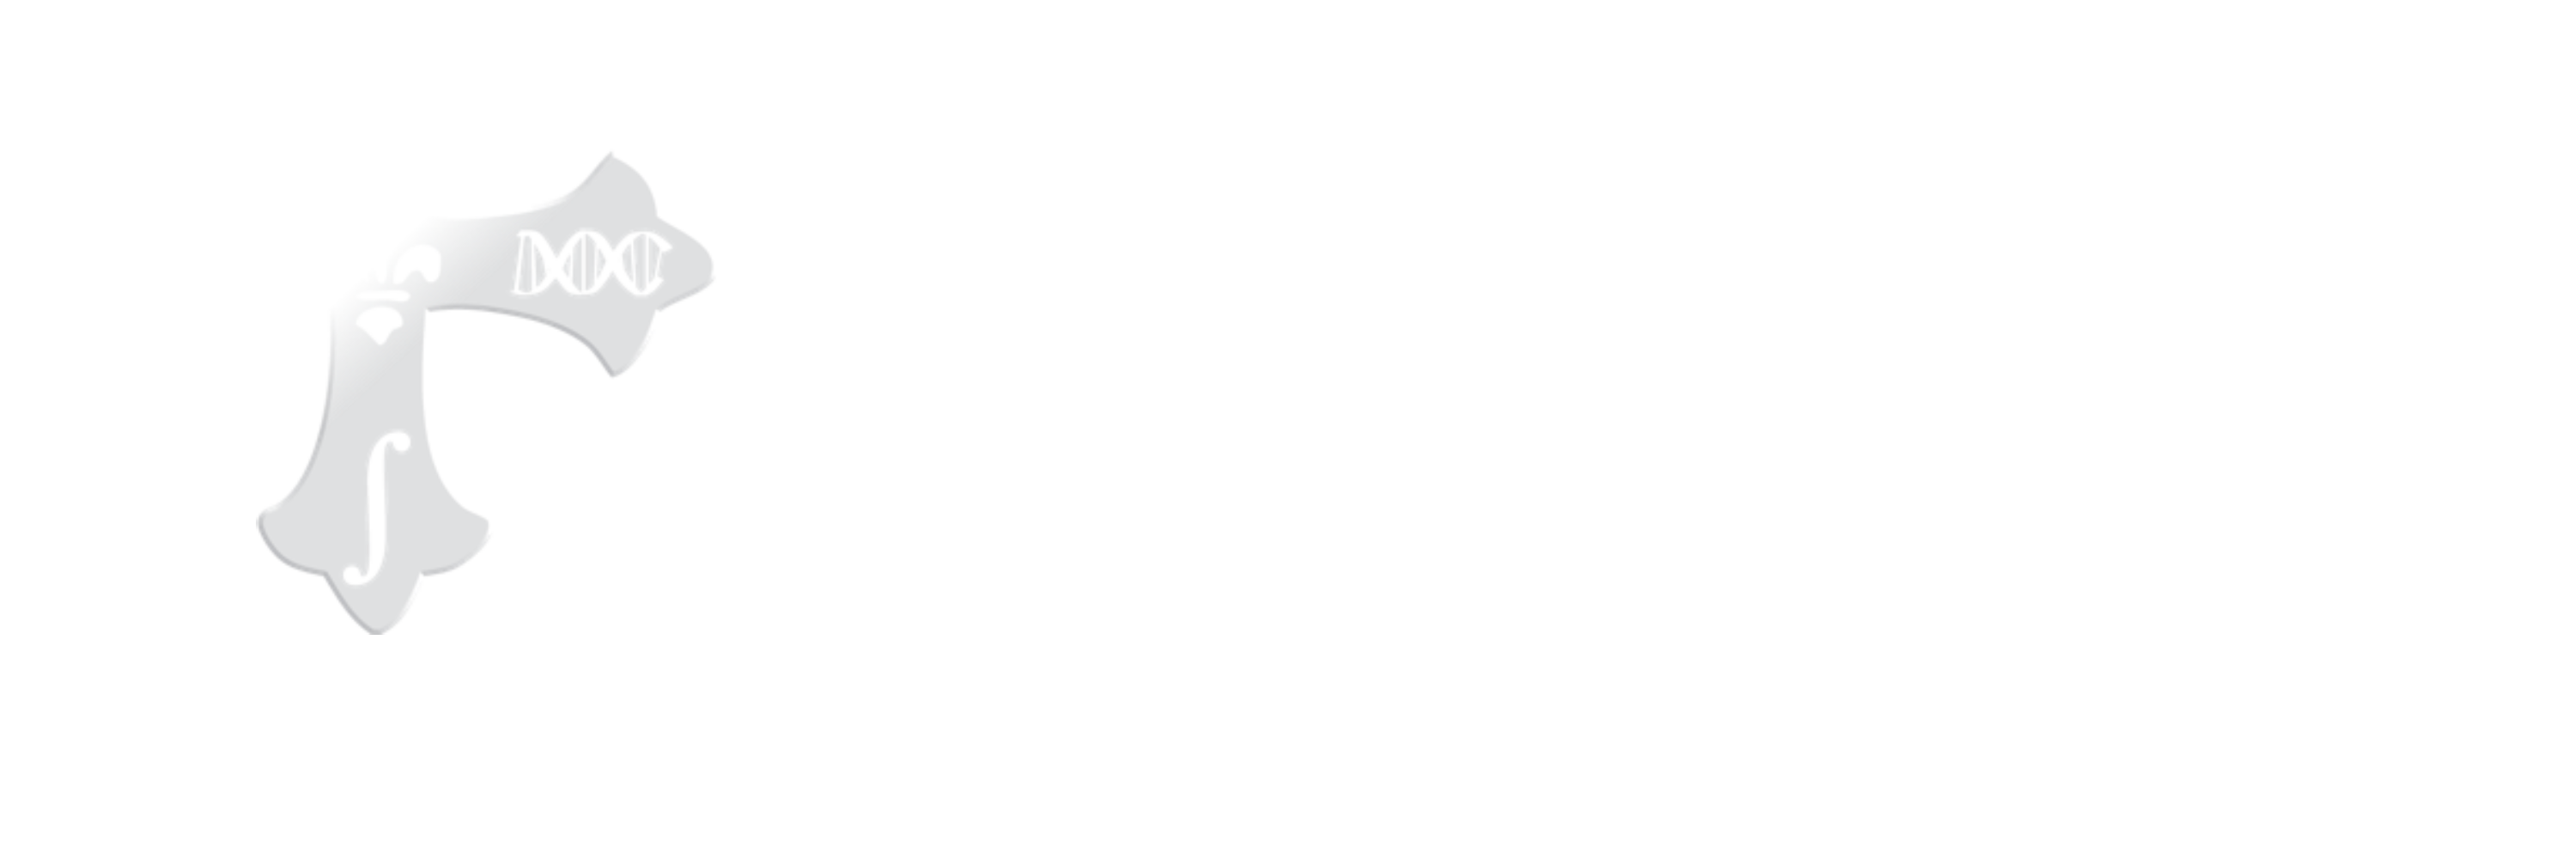 The Huttenhower Lab